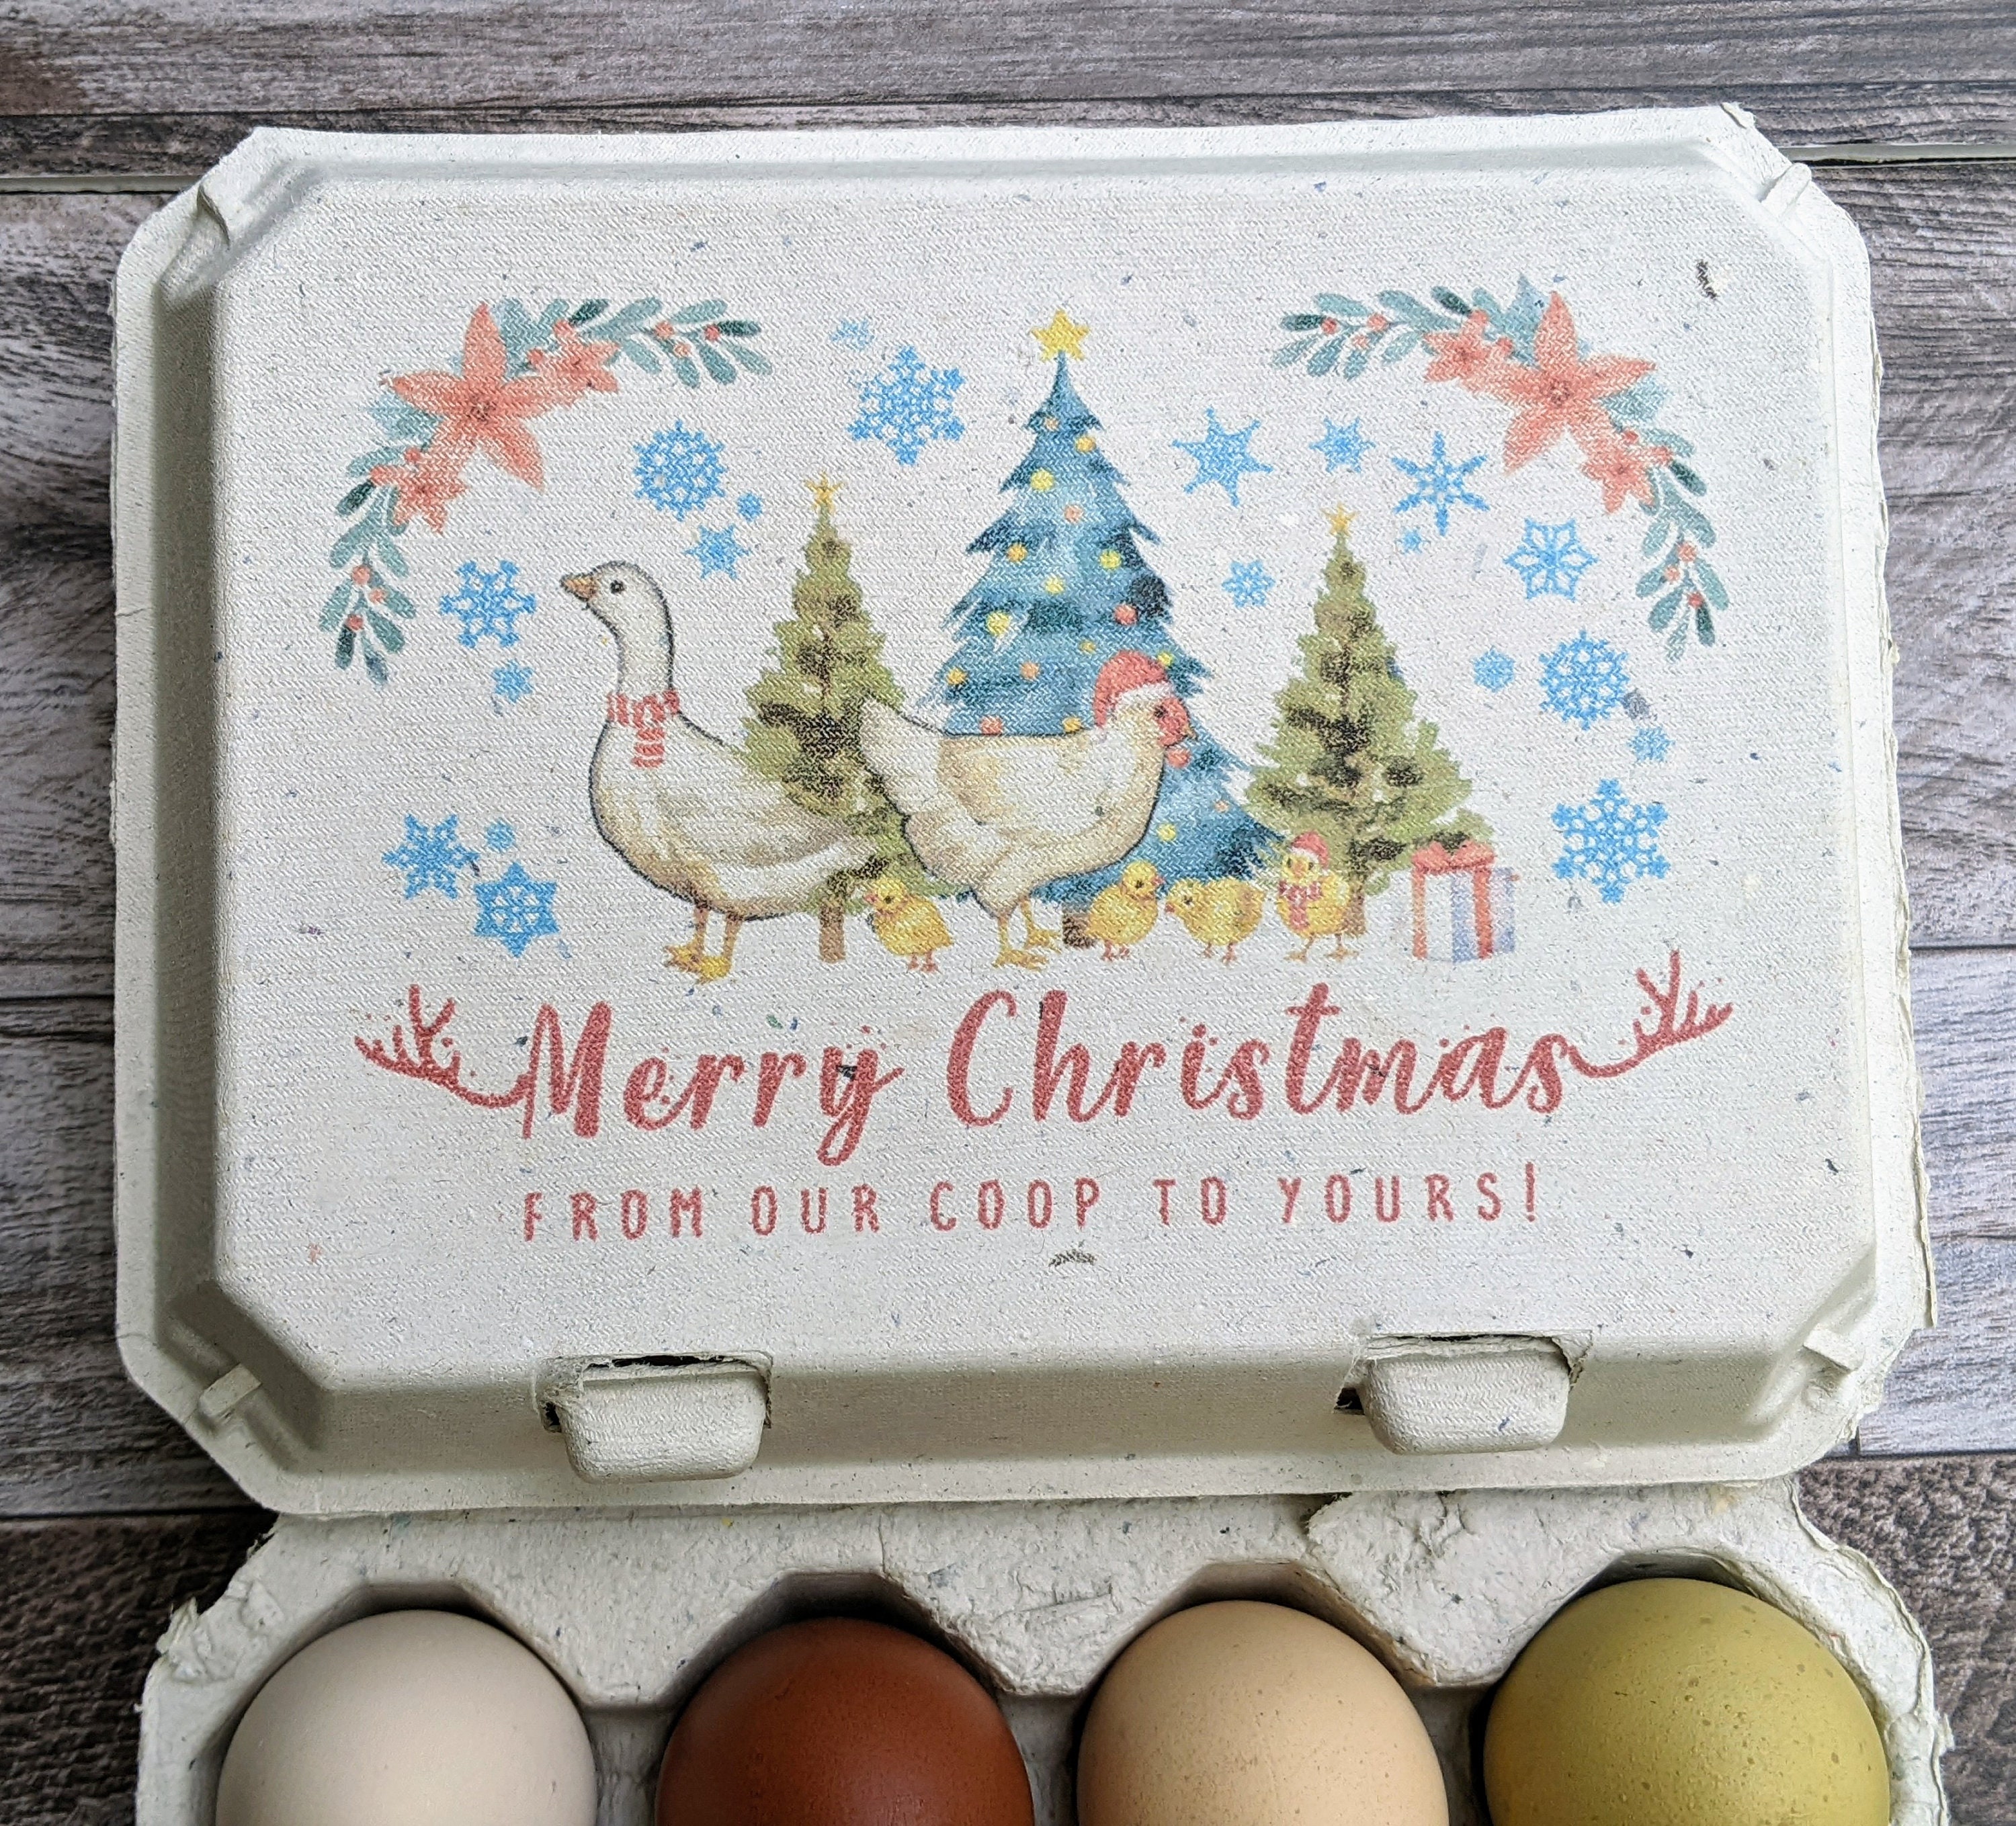 Vintage Chicken Egg Cartons (12 eggs)